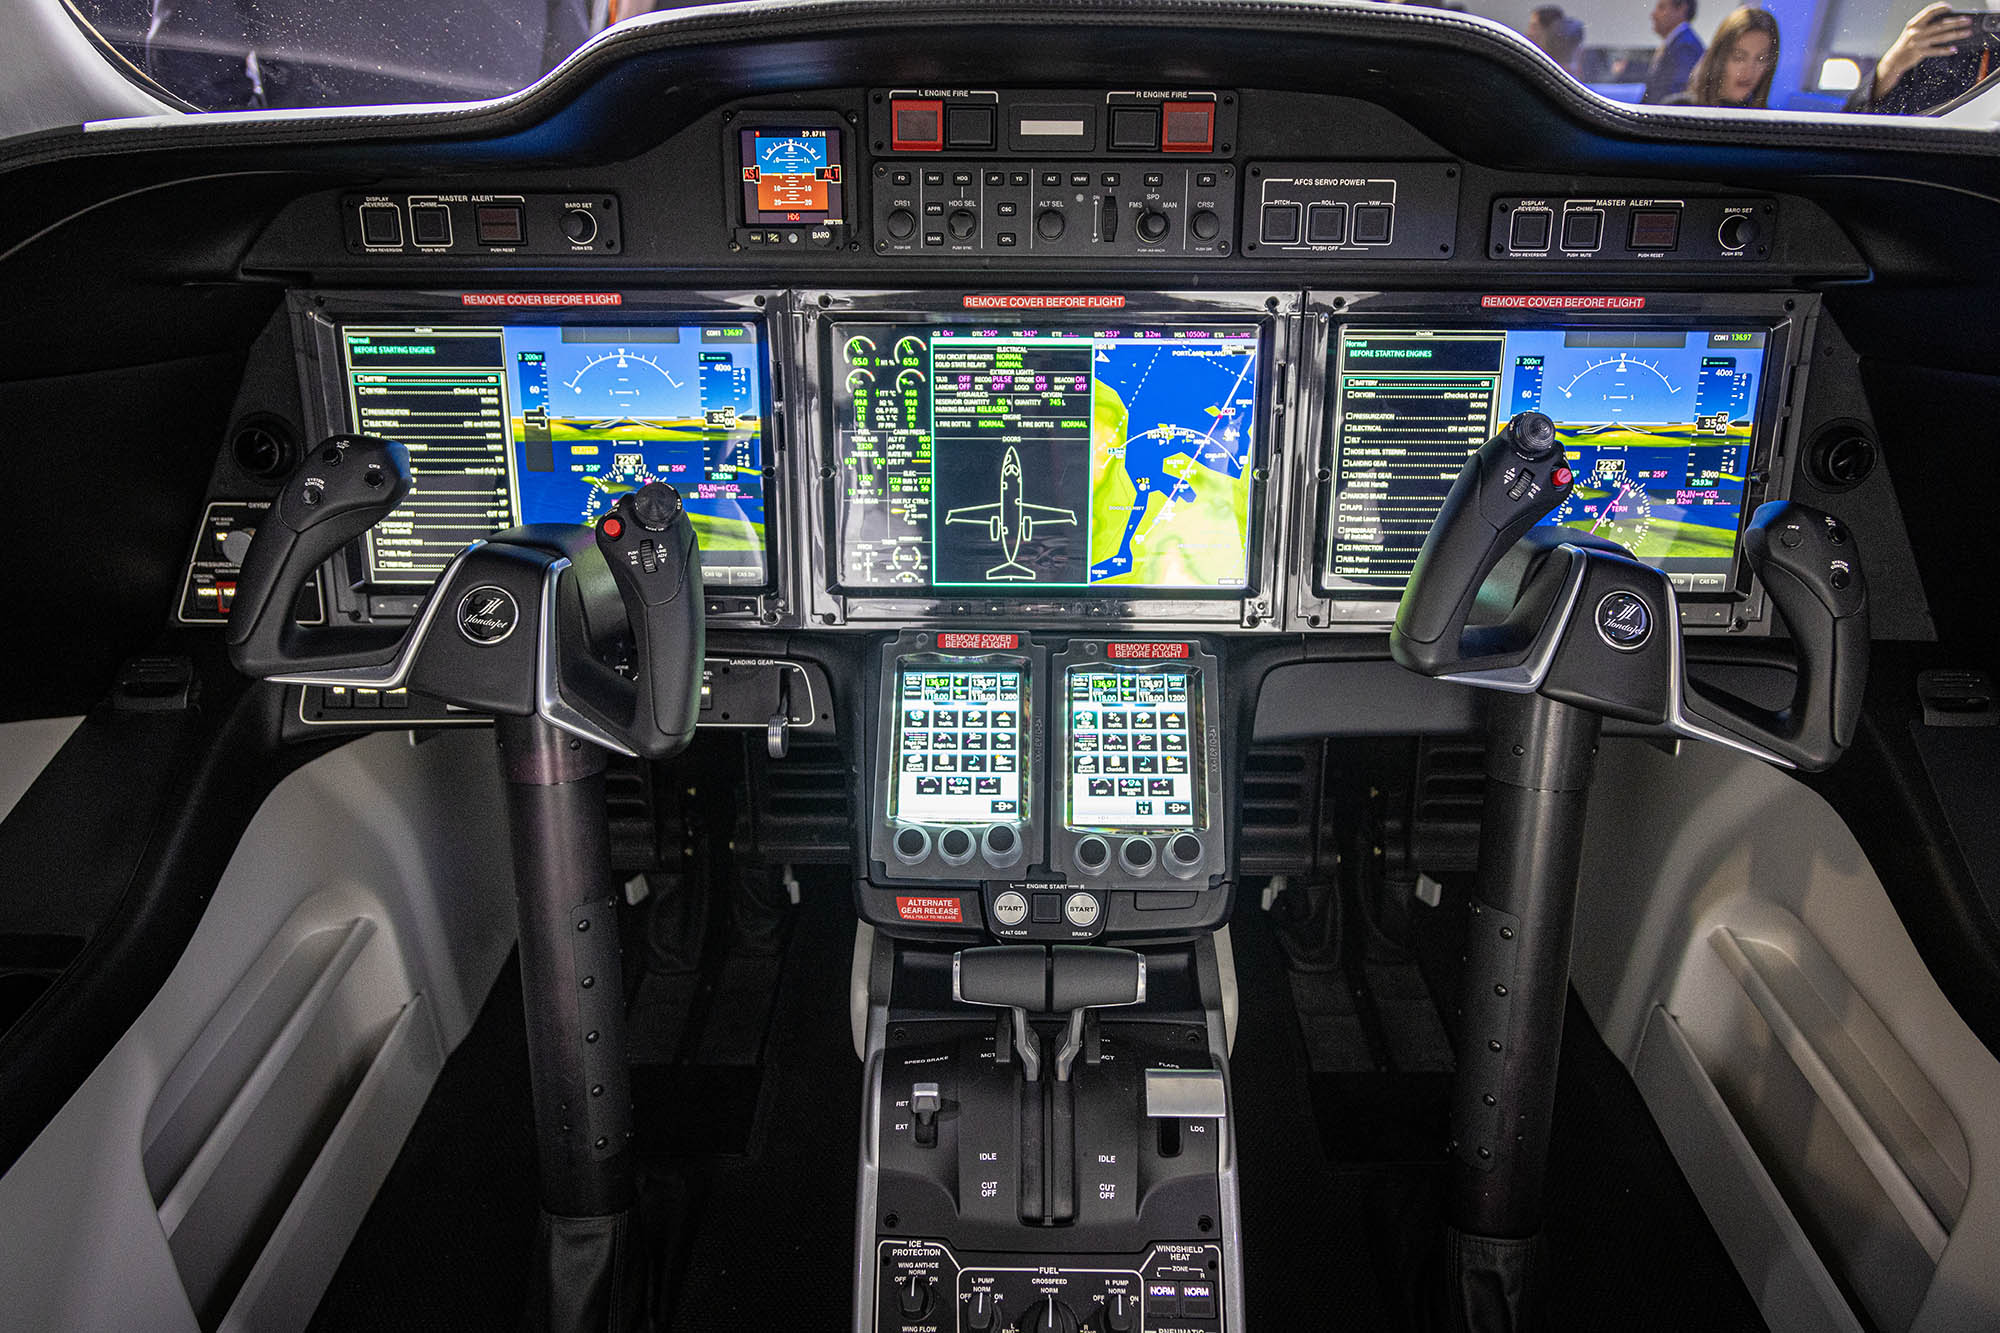 Honda Jet 2600 cockpit